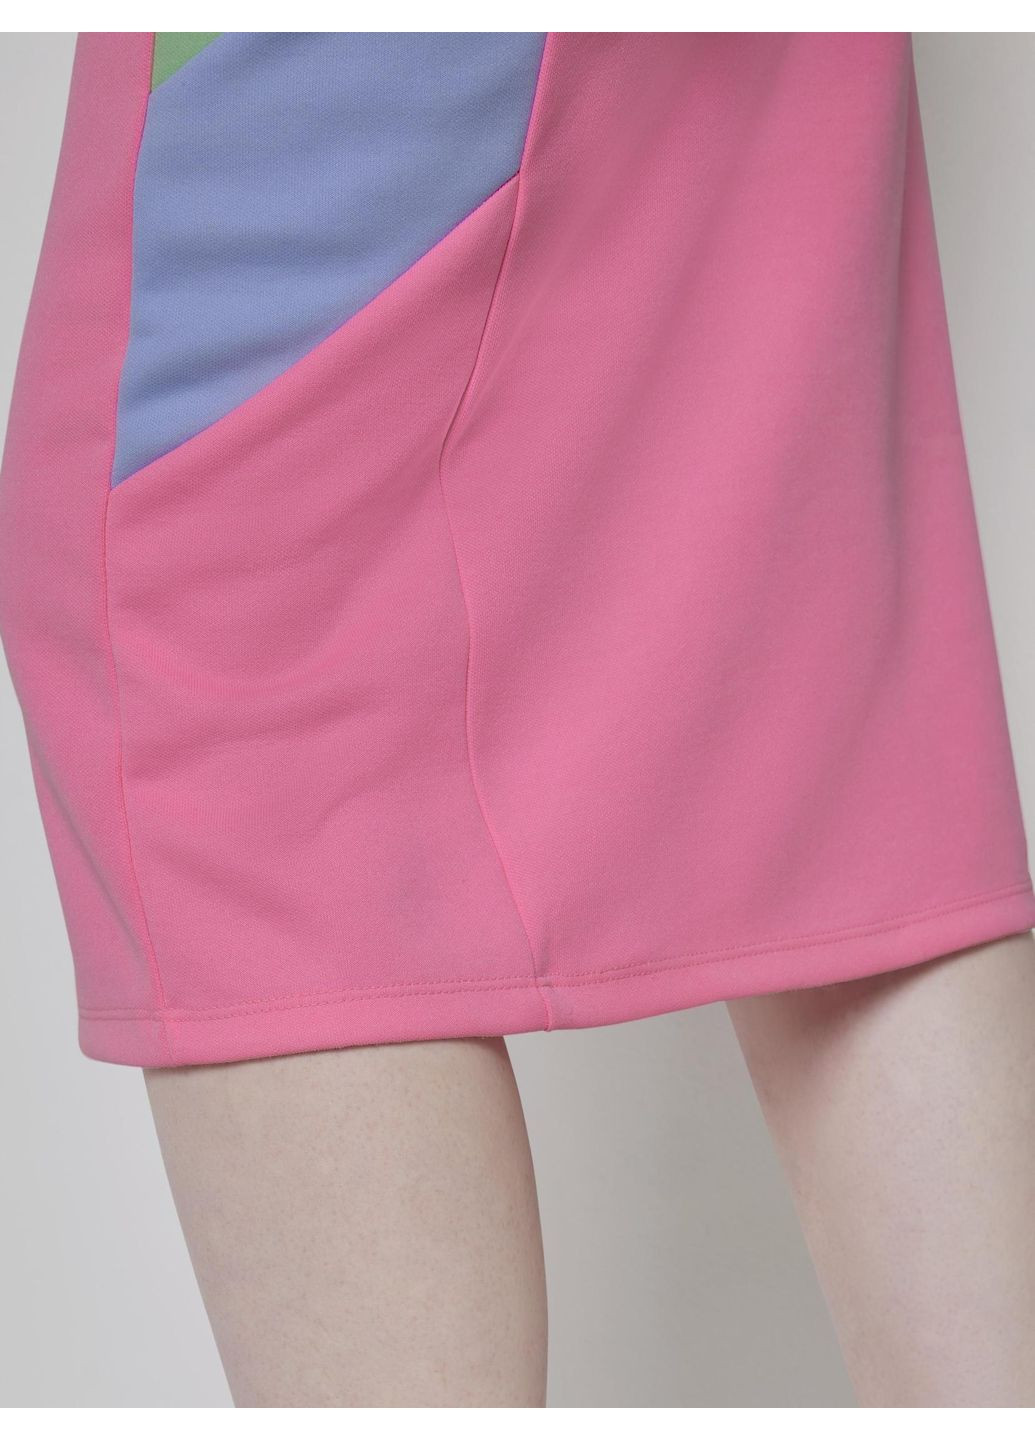 Розовая с геометрическим узором юбка Tom Tailor